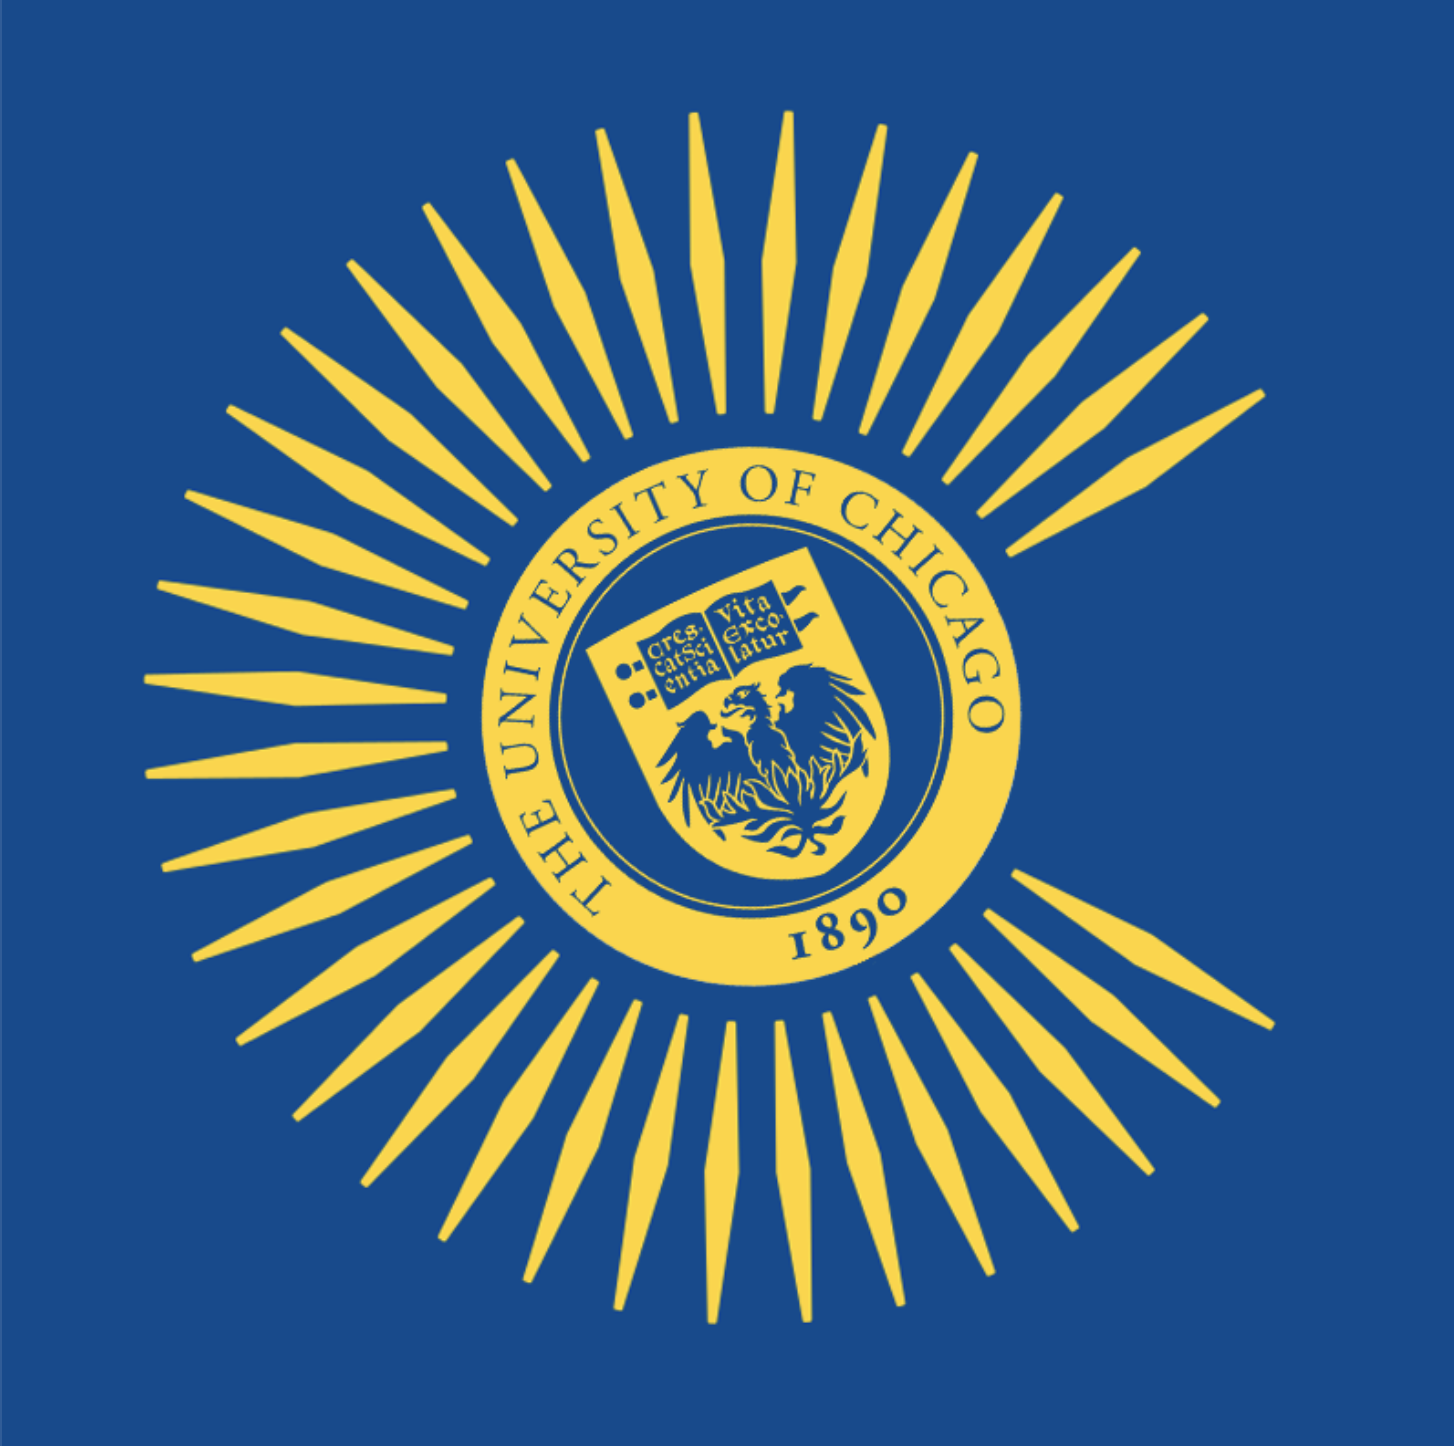 UChicago Commonwealth Students' Organization